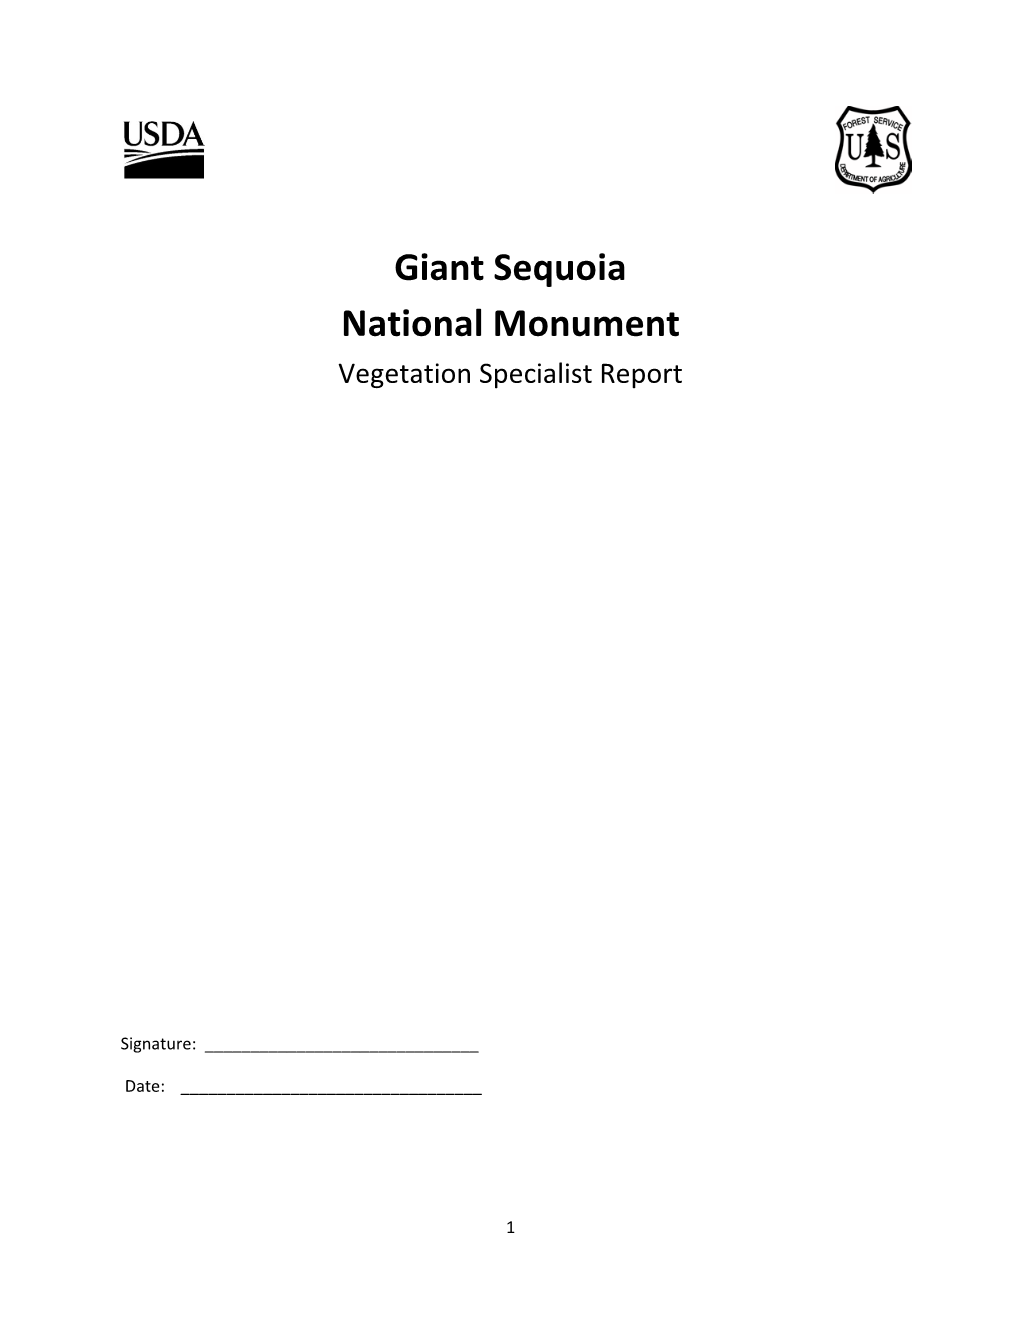 Giant Sequoia National Monument Vegetation Specialist Report